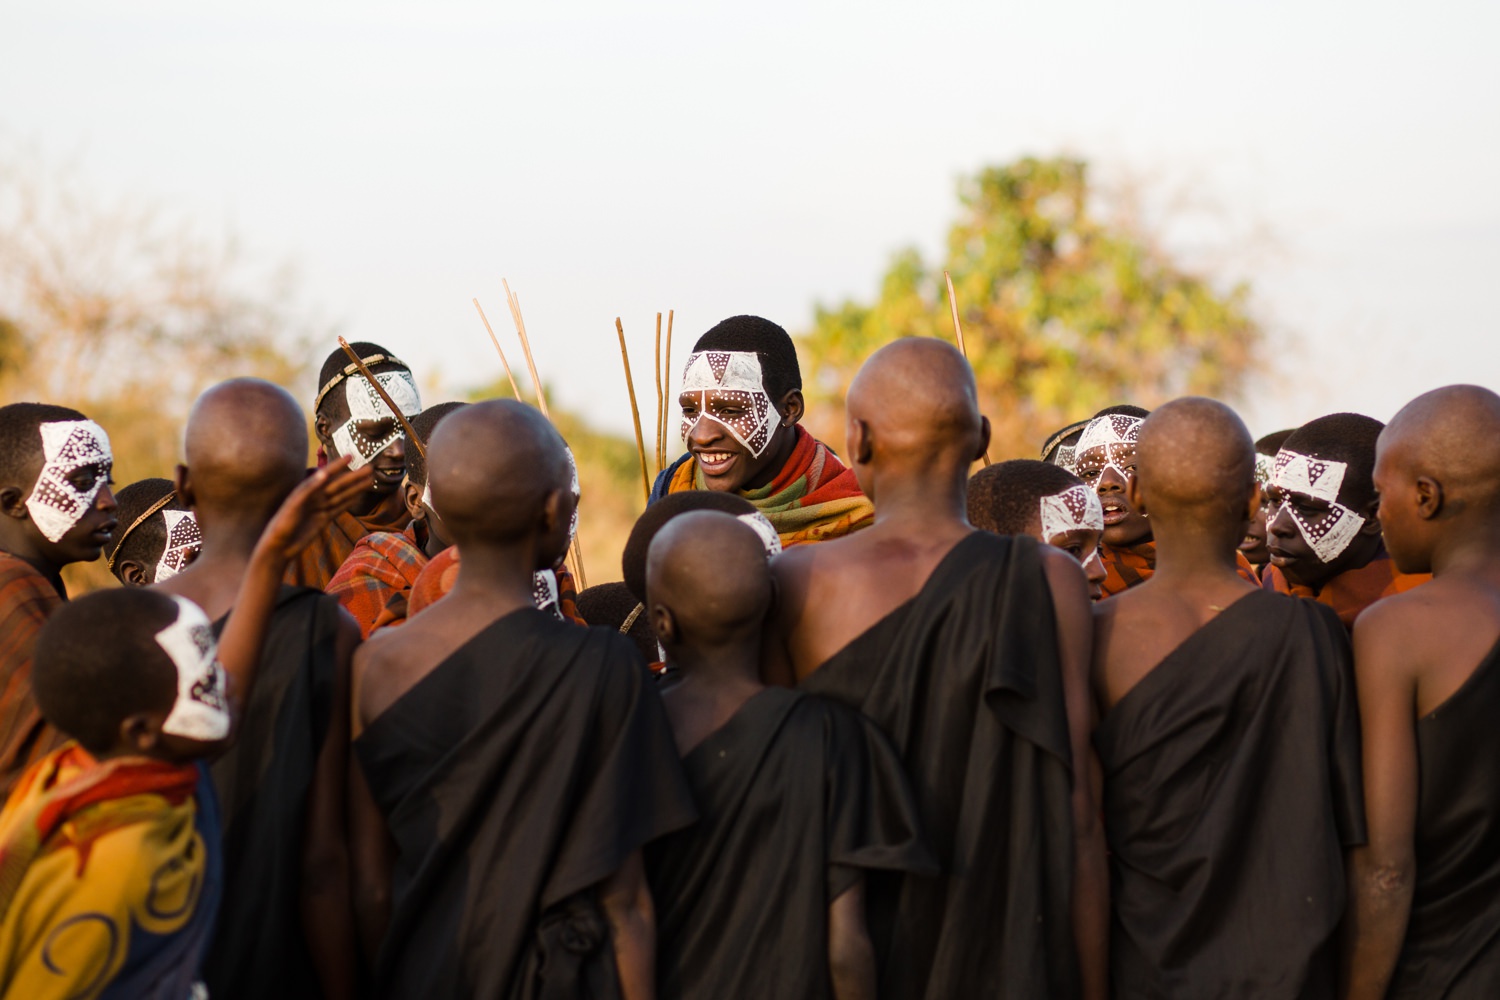 cameron-zegers-travel-photographer-tanzania-culture-ceremony.jpg